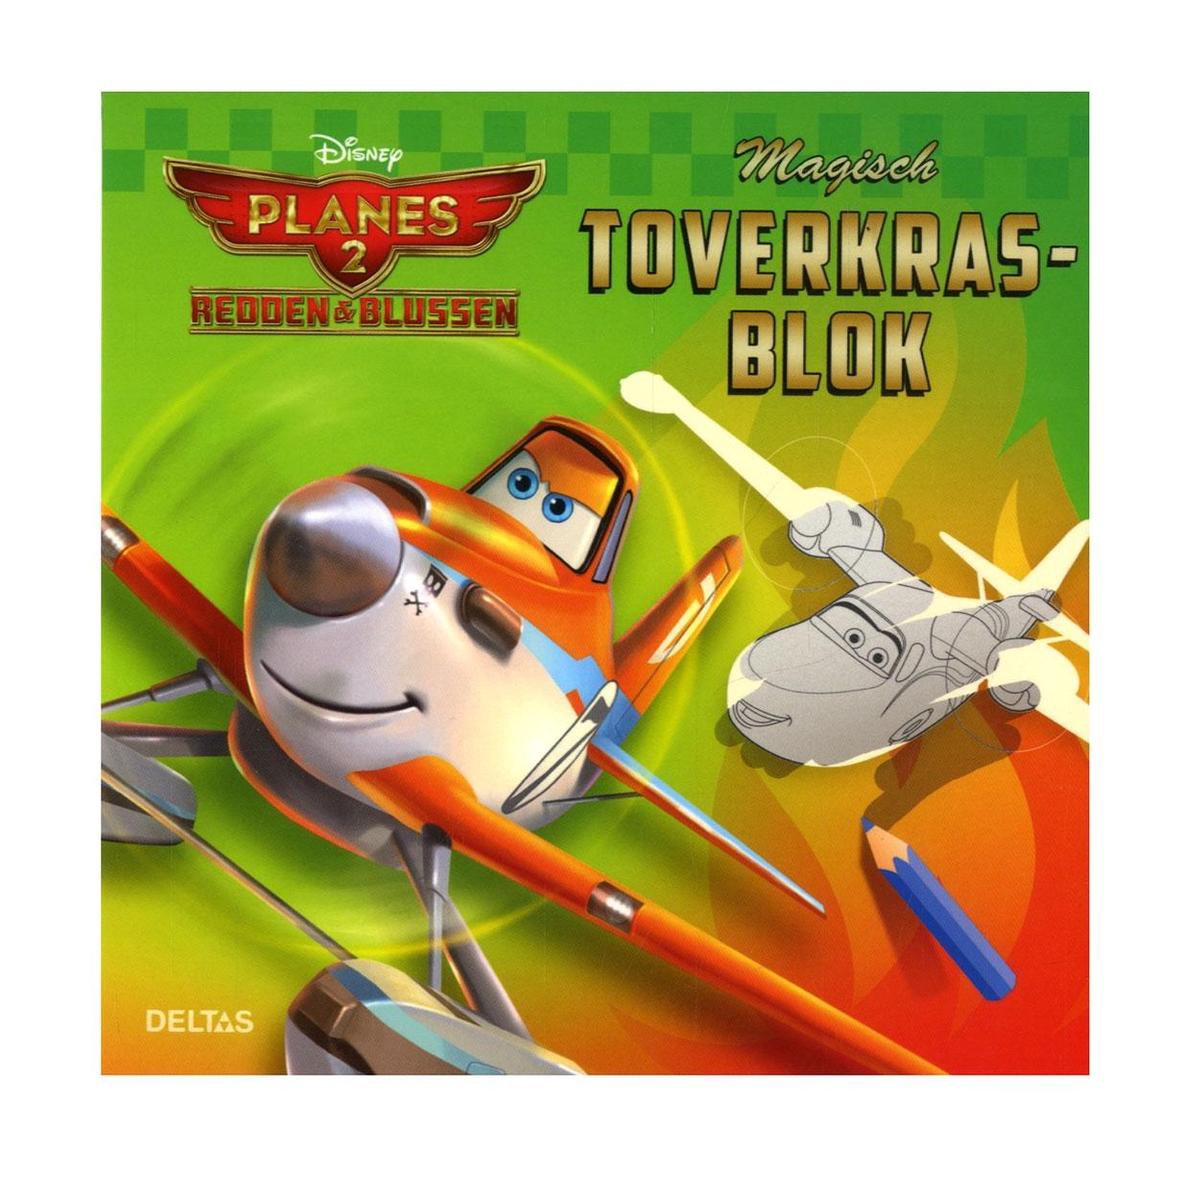 Disney Magisch Toverkrasblok Planes 2